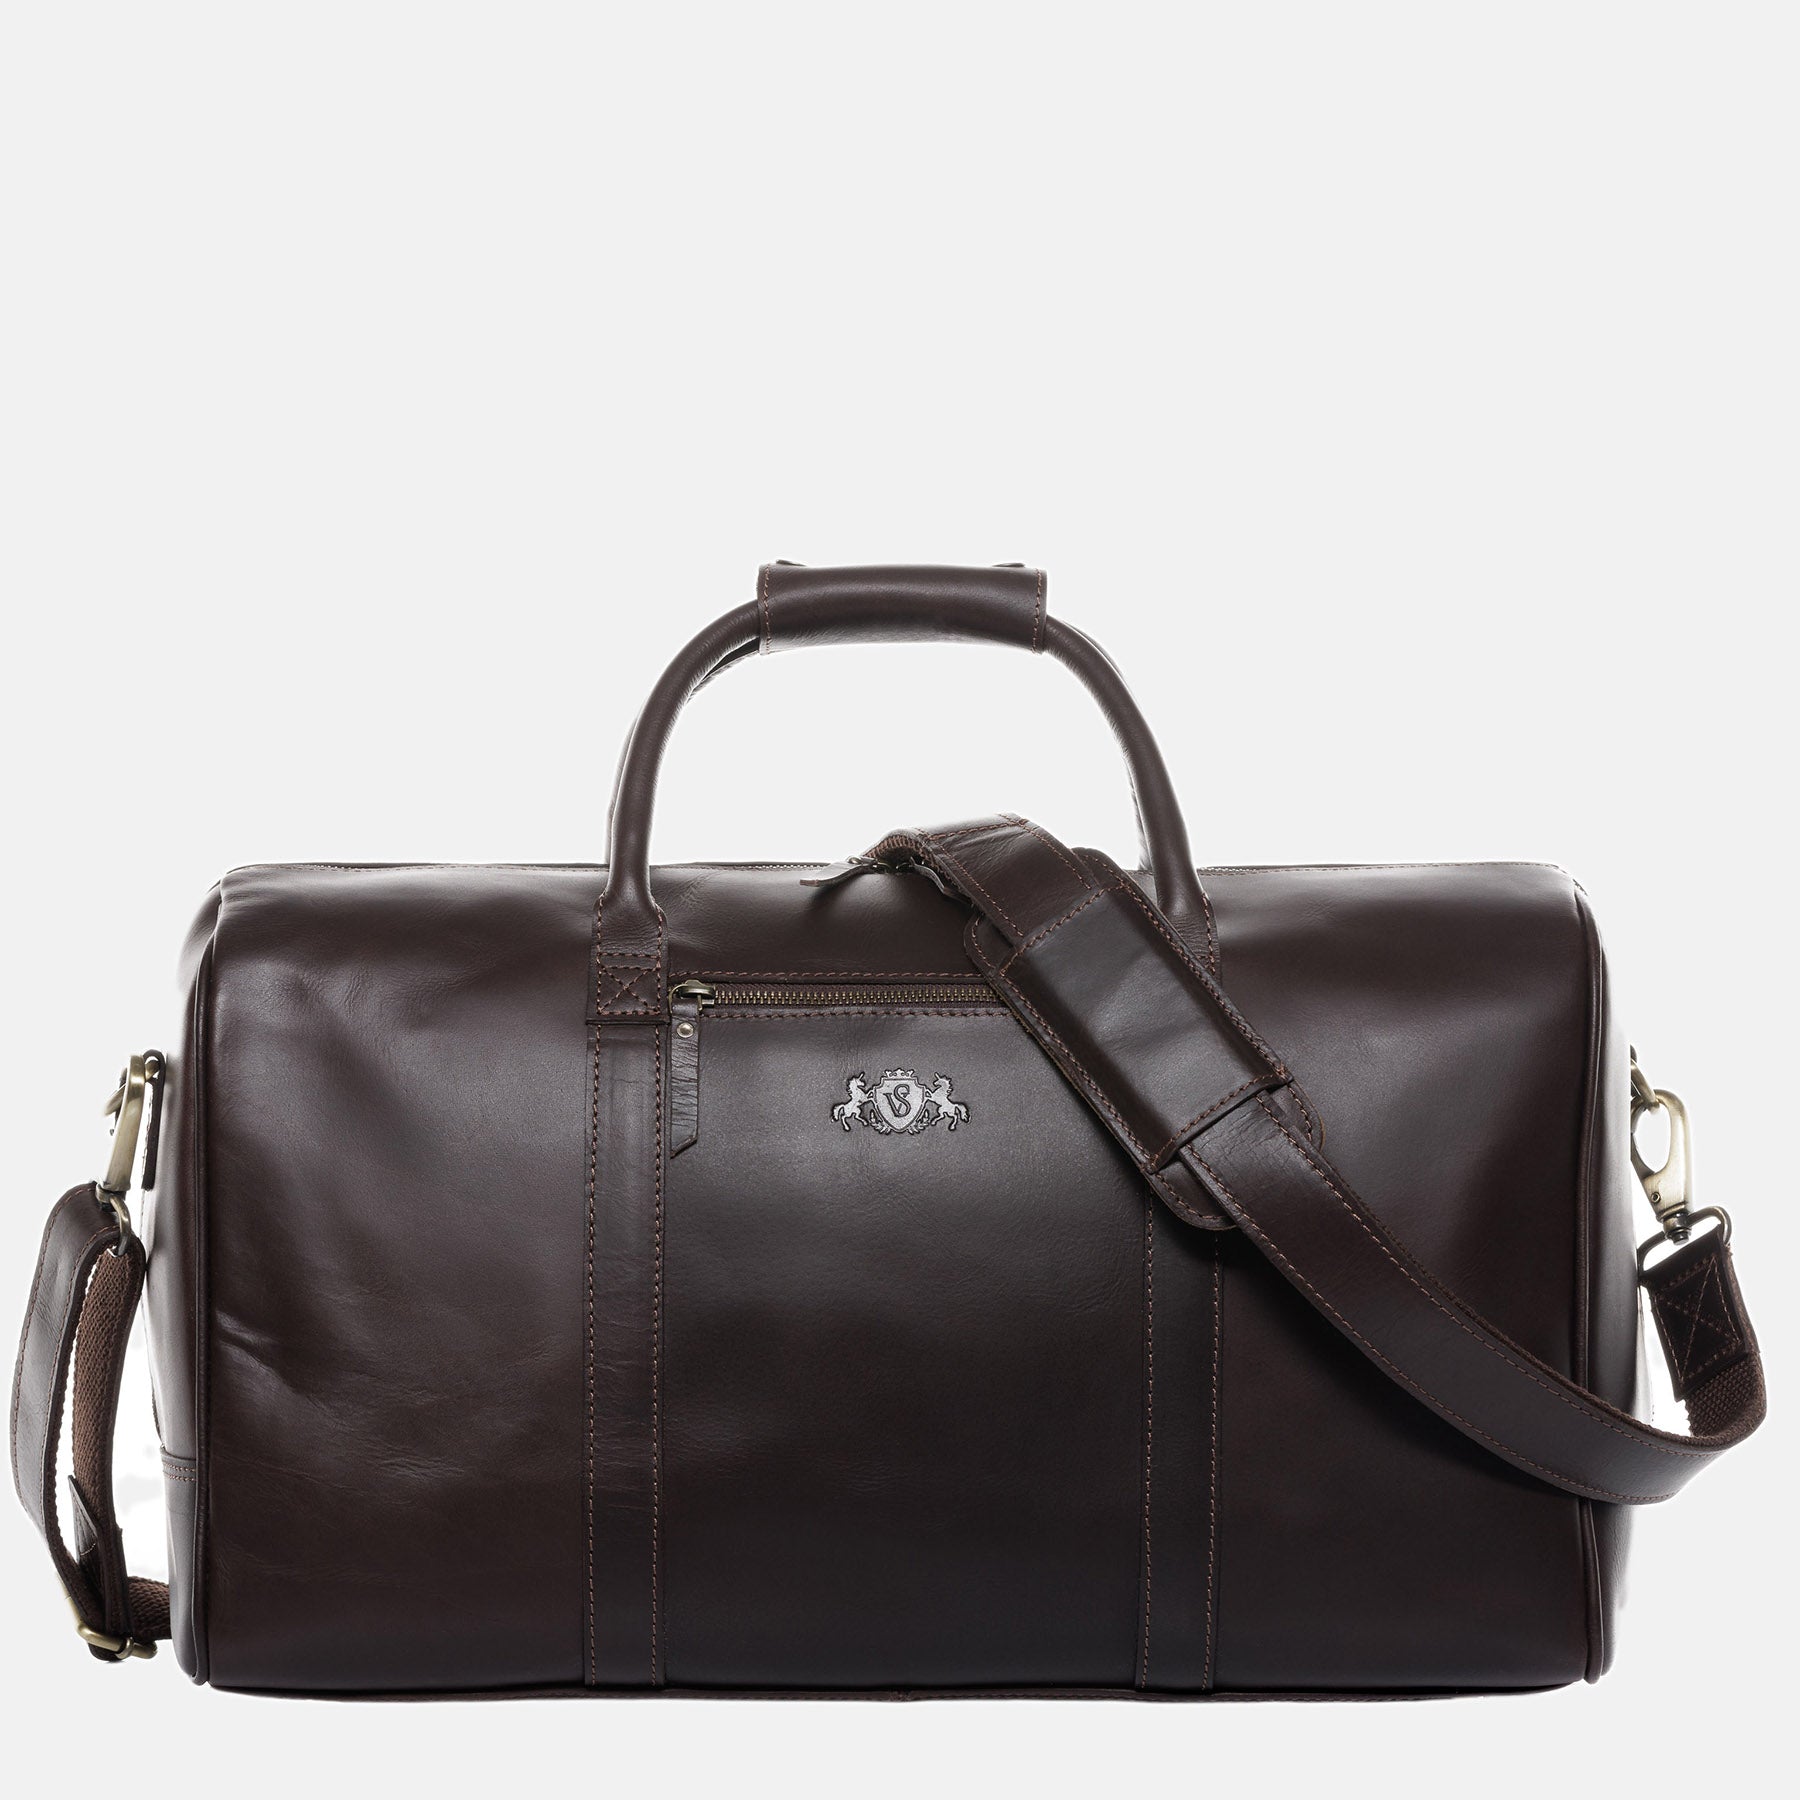 Travel bag CHAD buffalo leather brown